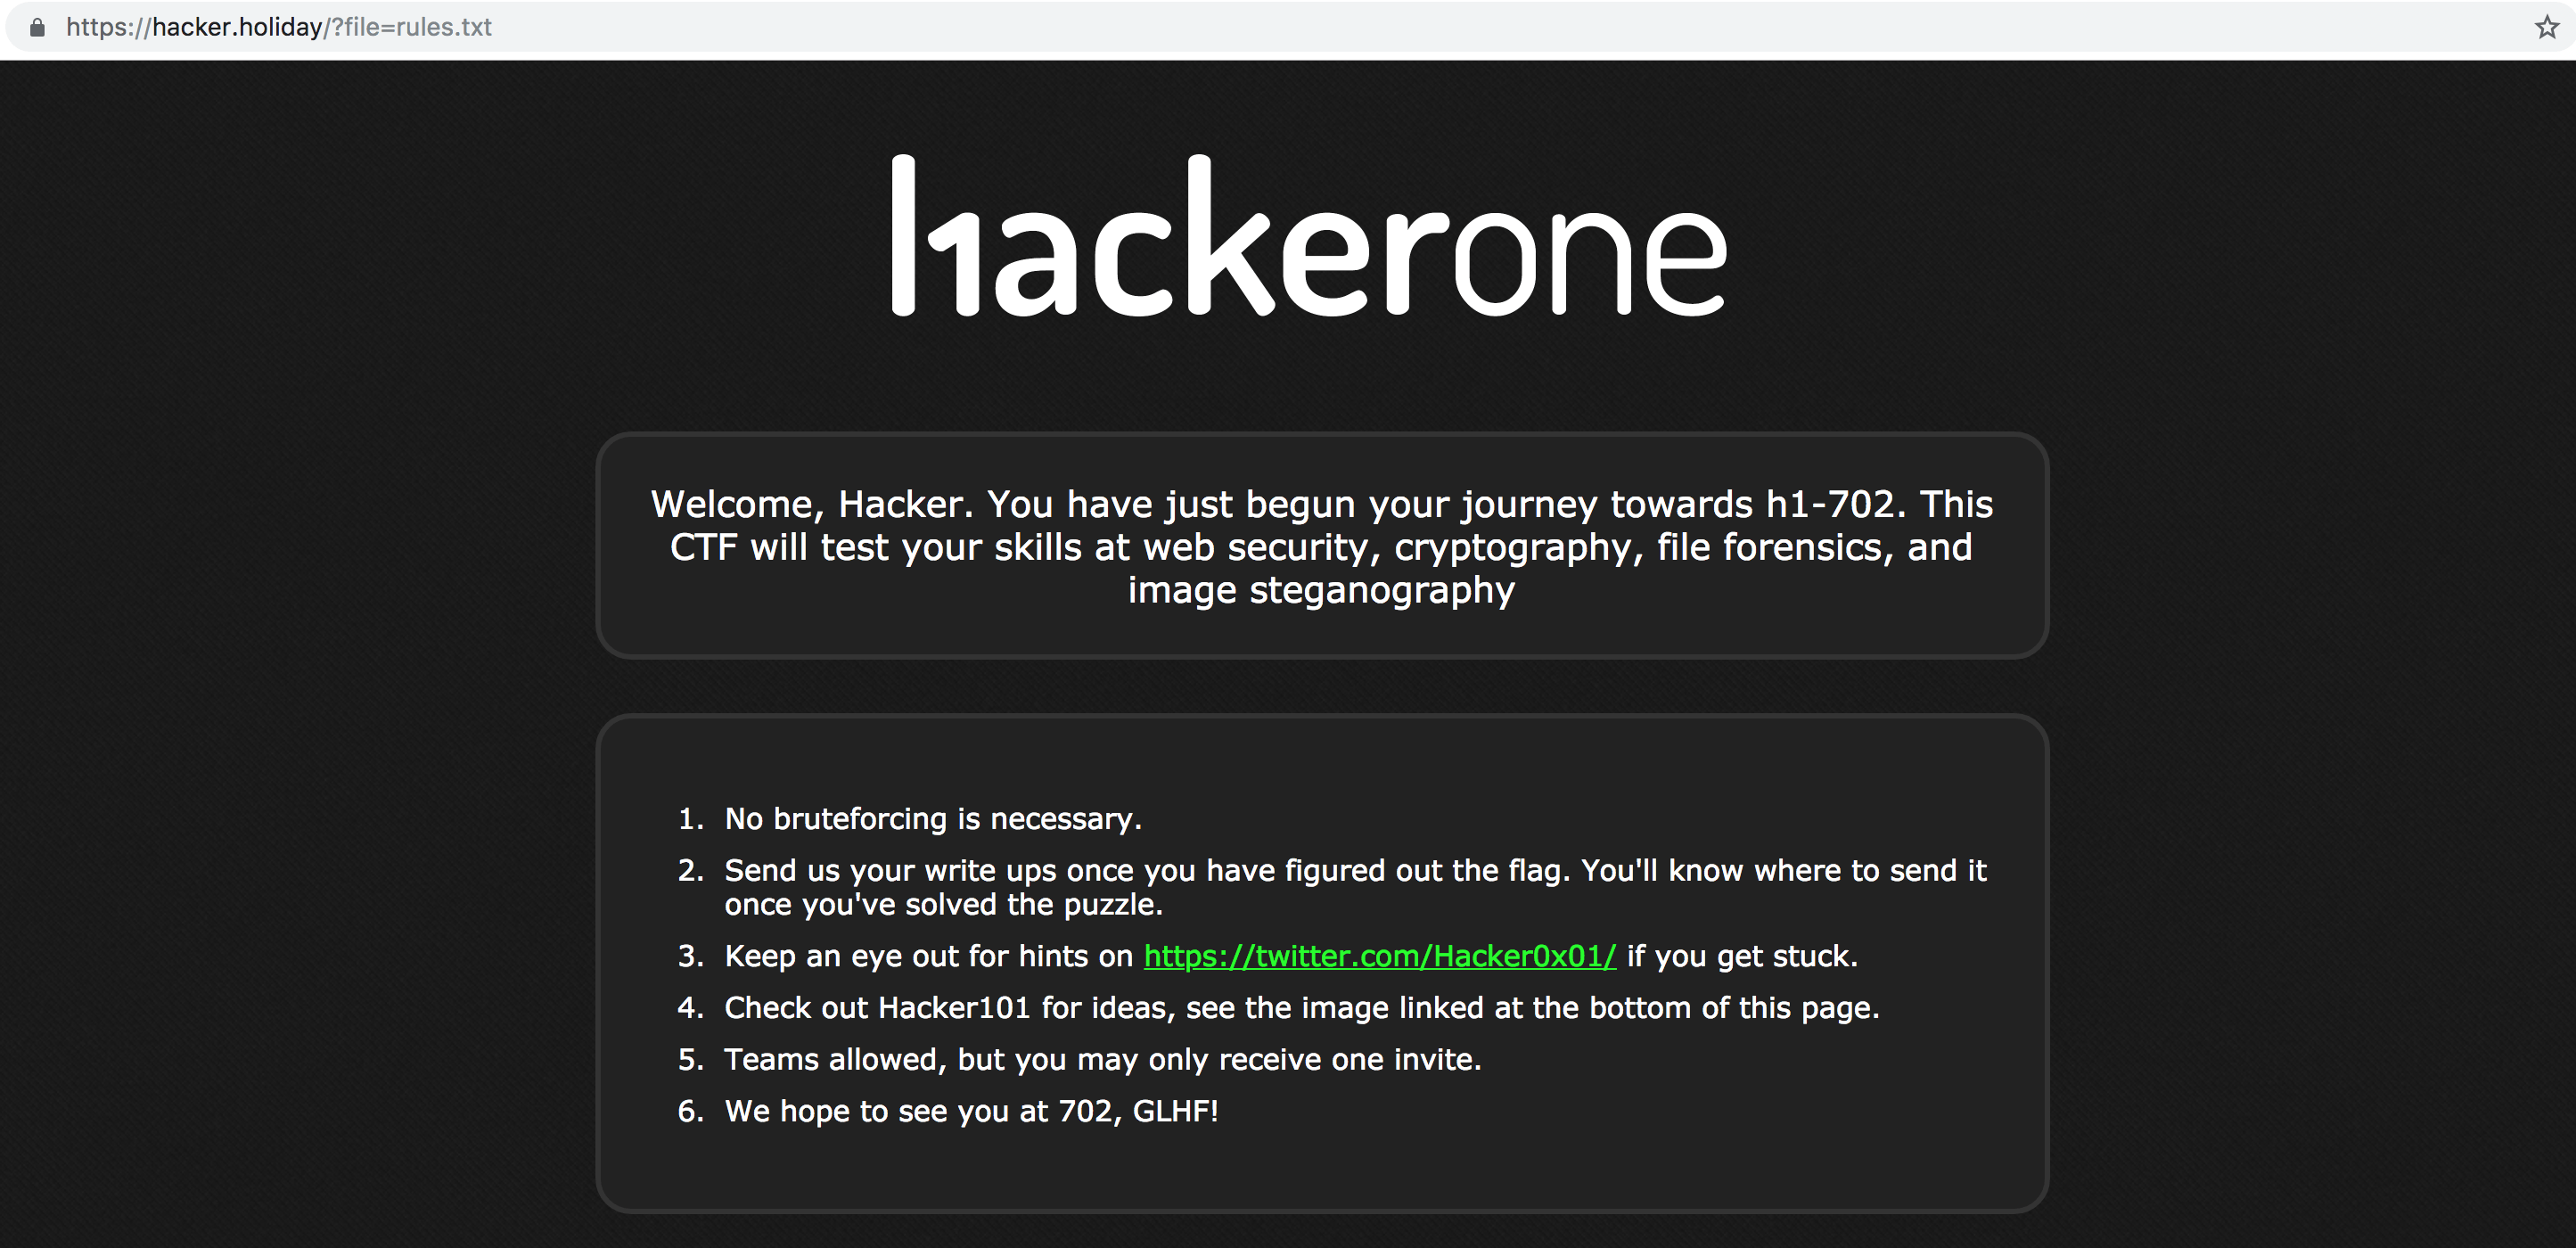 HackerOne - h1702 #HackerHoliday Web HTTP Parameter